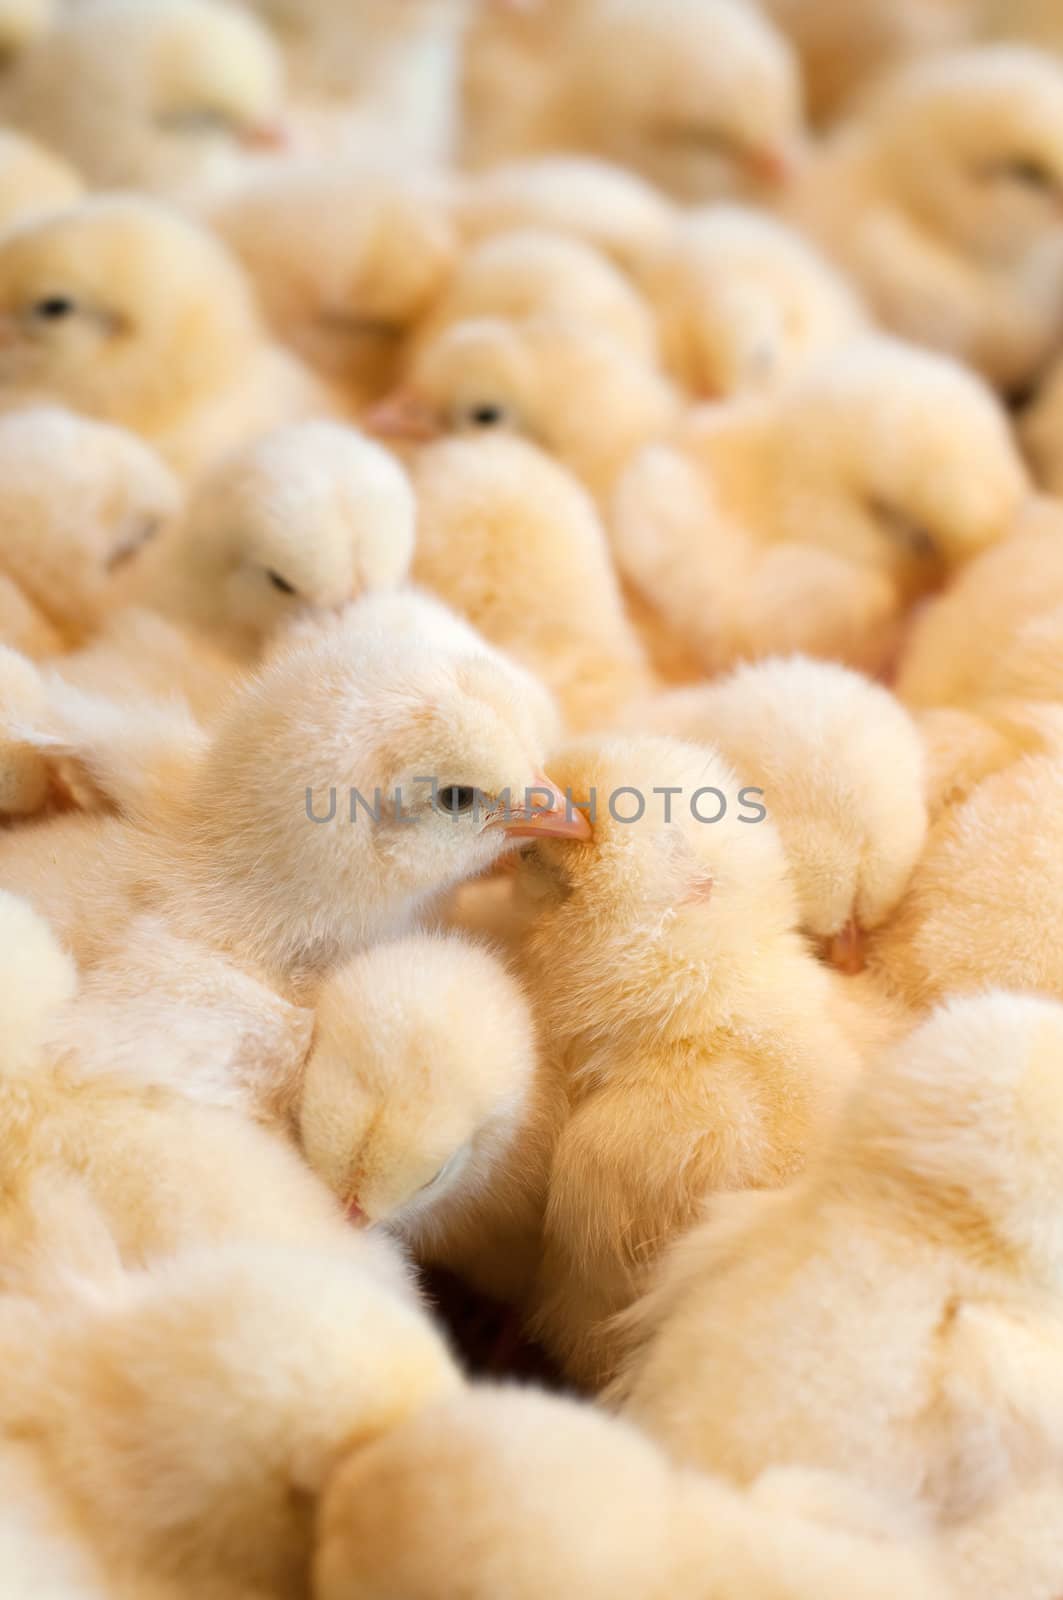 Bunch of chicks by szefei